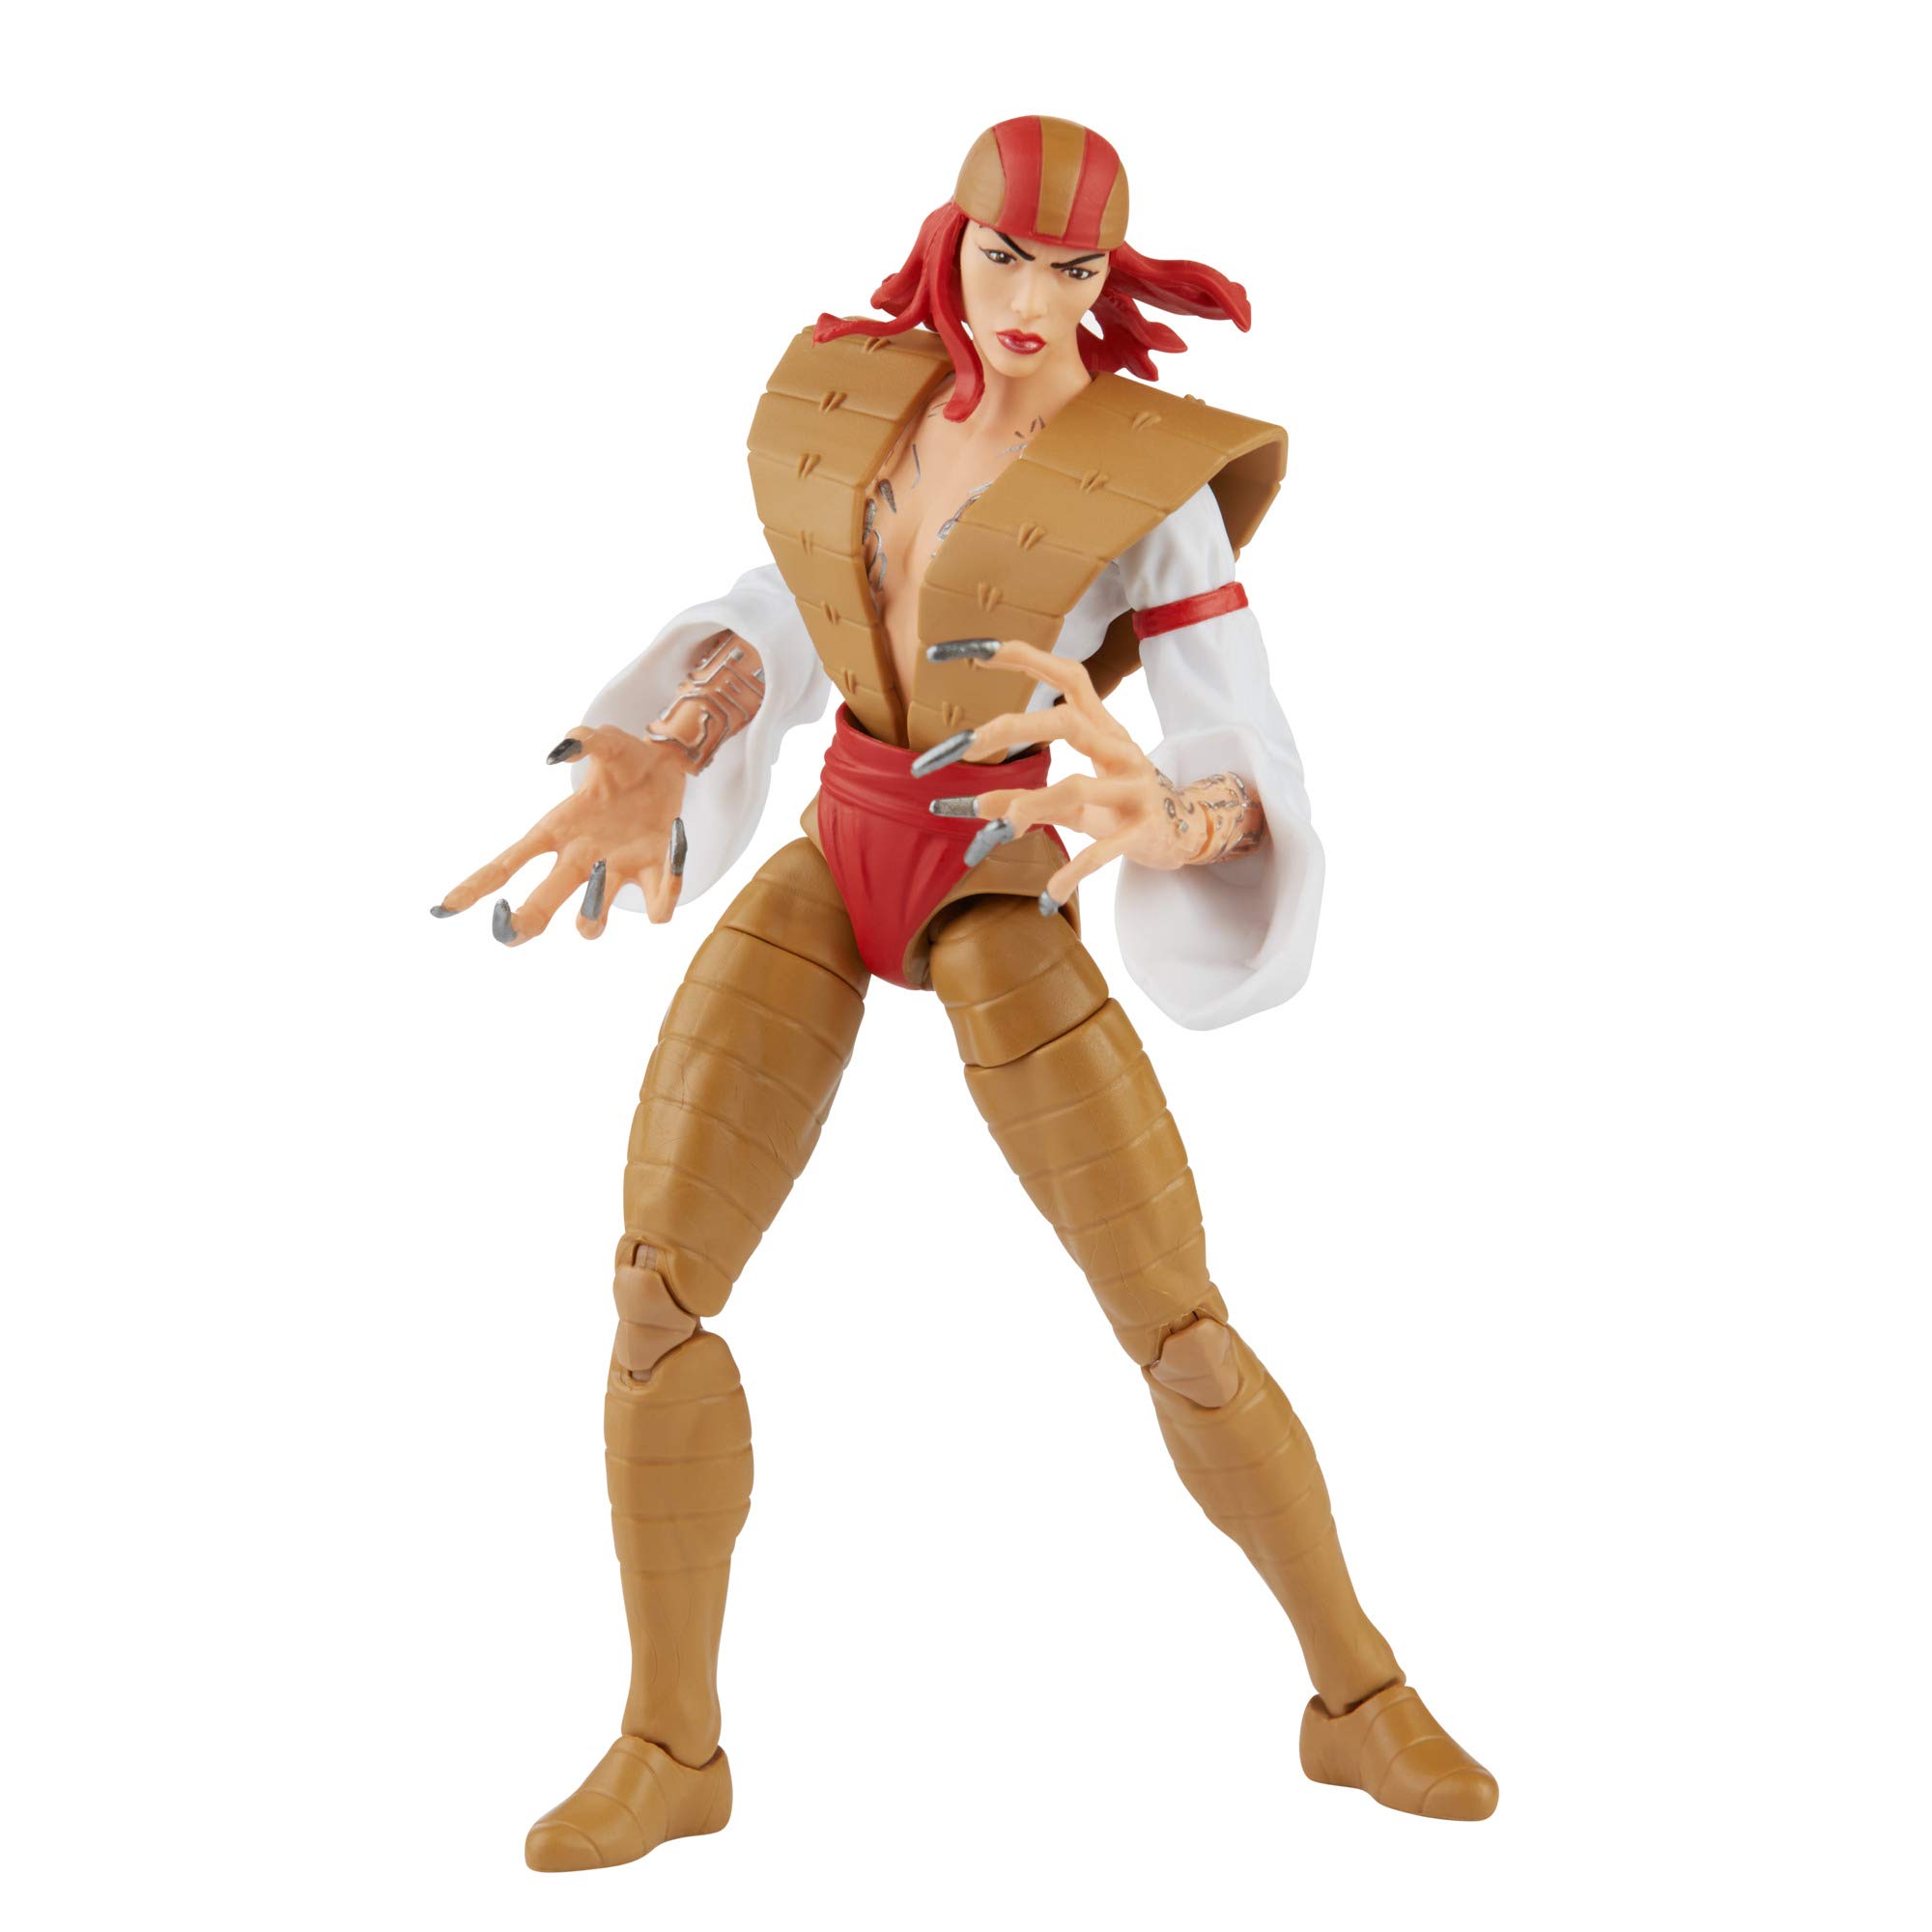 Marvel Hasbro Legends Series 6-inch Collectible Lady Deathstrike Action Figure, Includes 1 Build-A-Figure Part(s), Premium Design